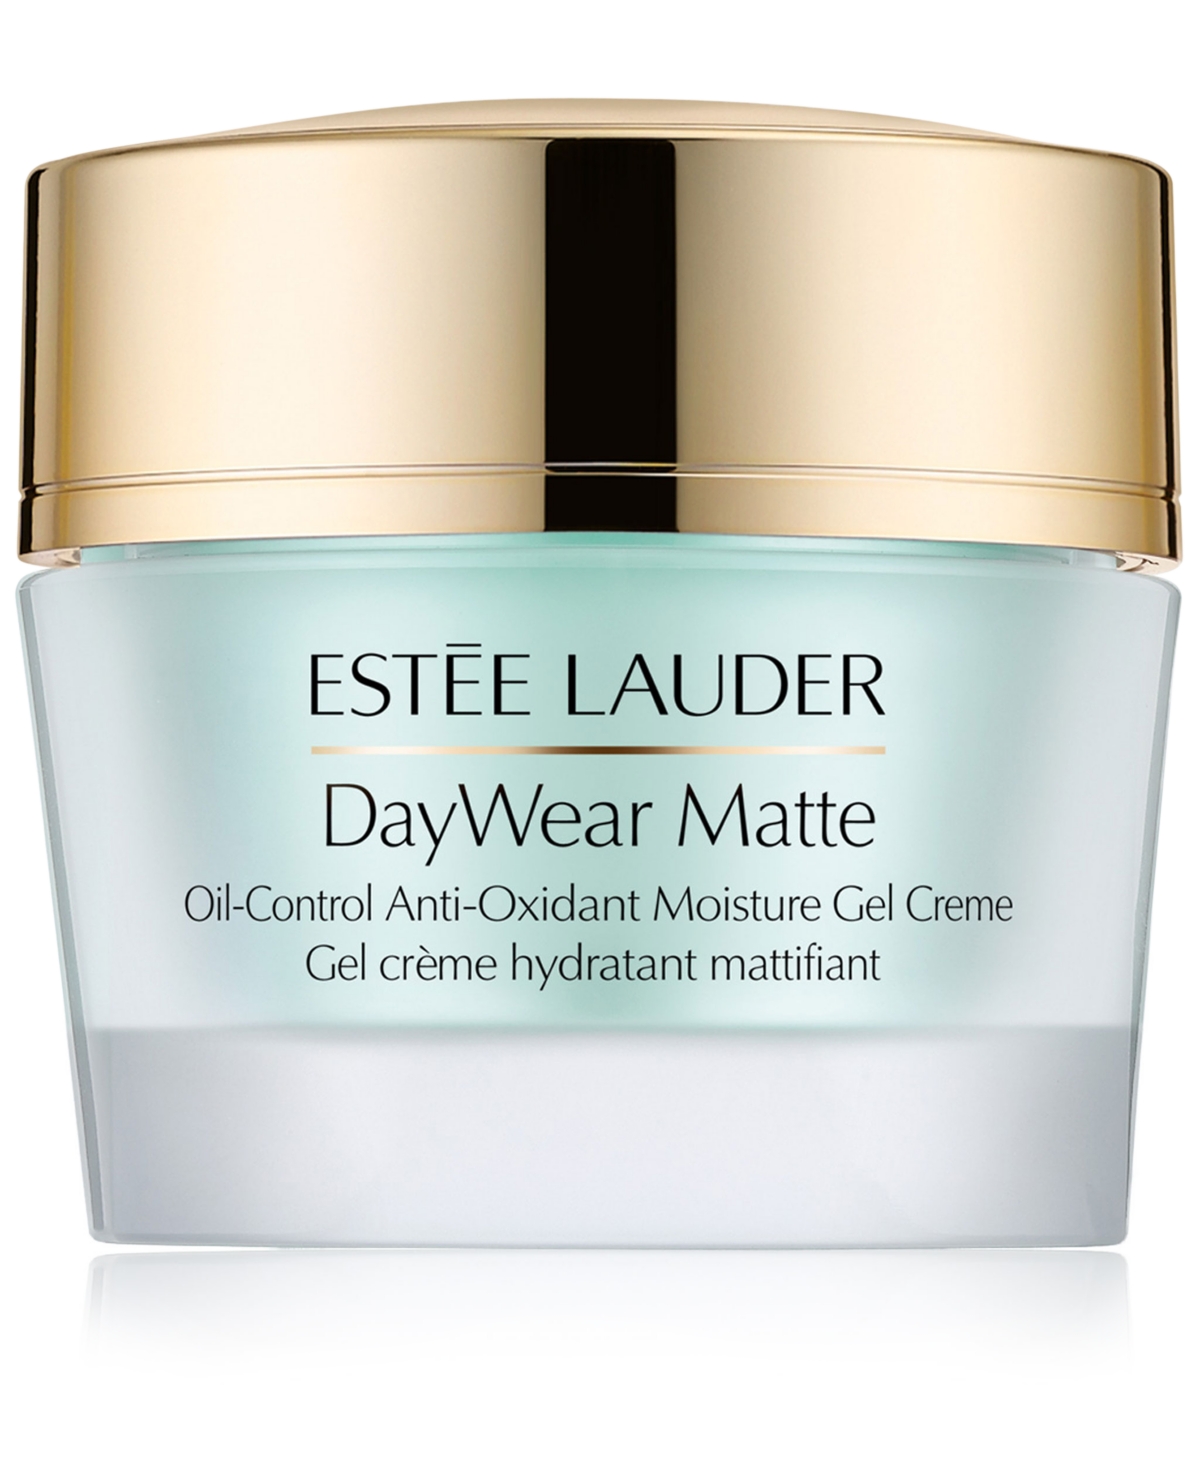 Estée Lauder Daywear Matte Oil-control Anti-oxidant Moisturizer Gel Creme, 1.7-oz. In No Color